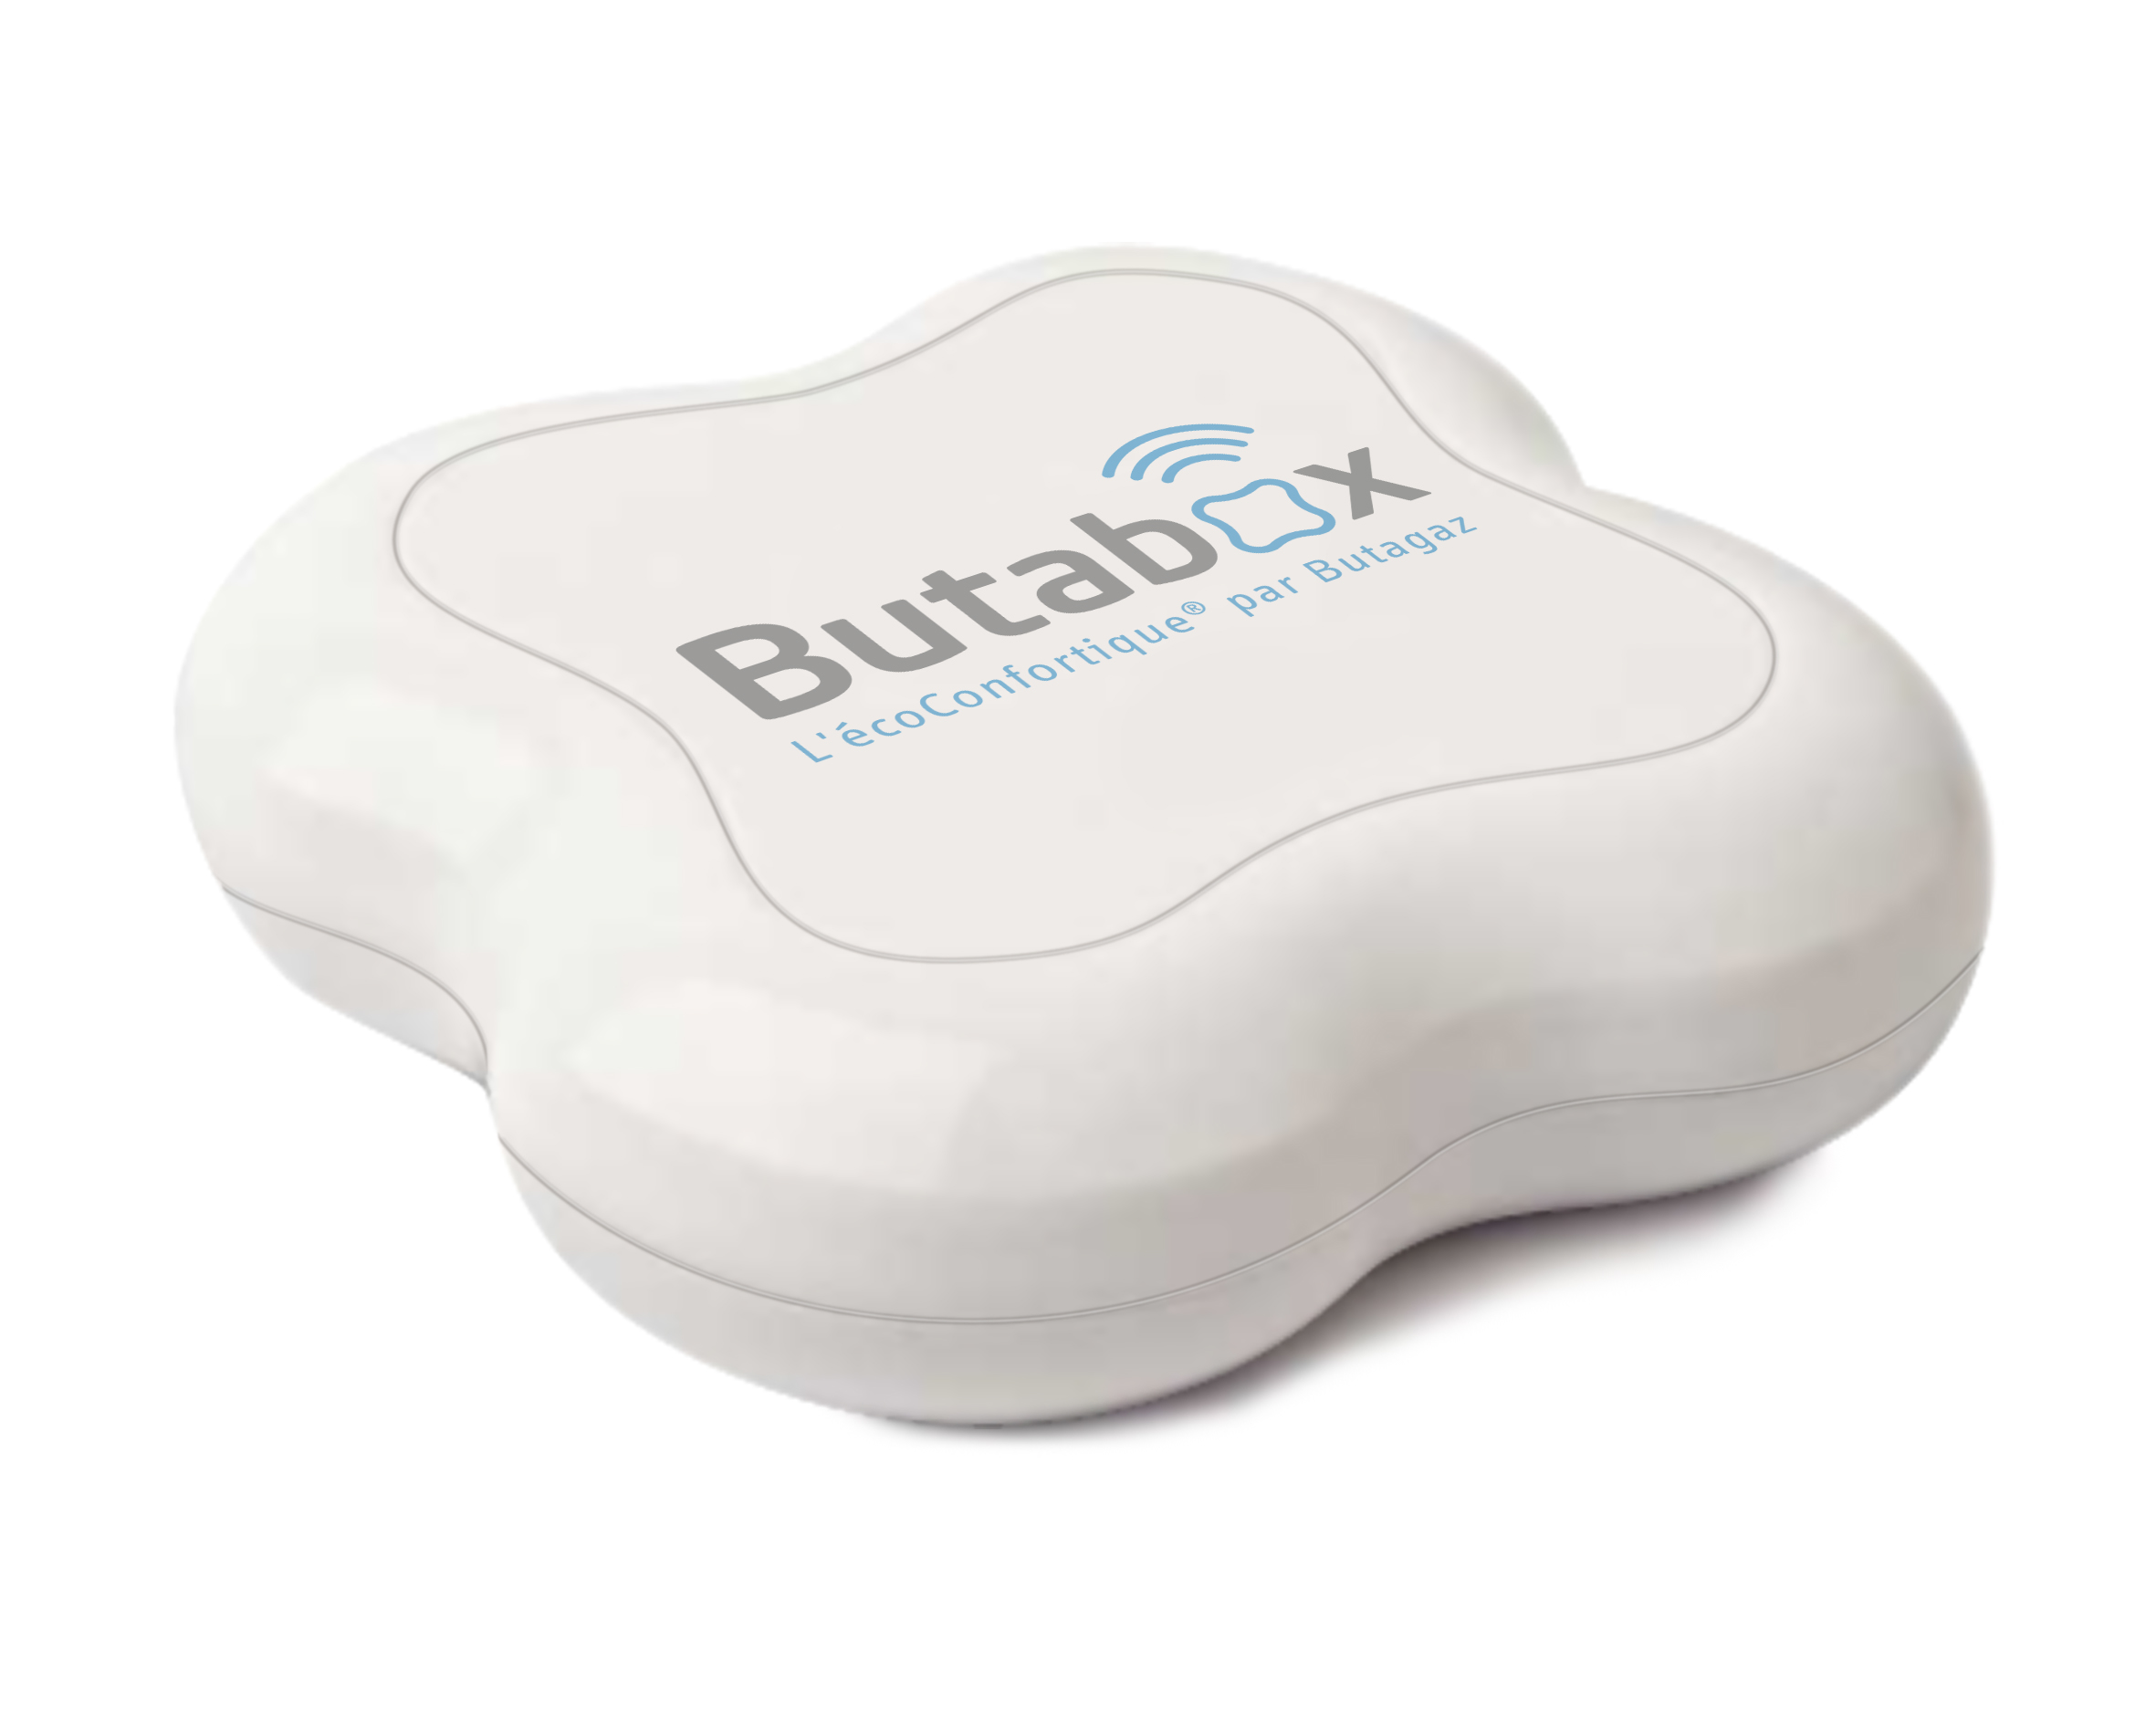 butabox, innovation de Butagaz